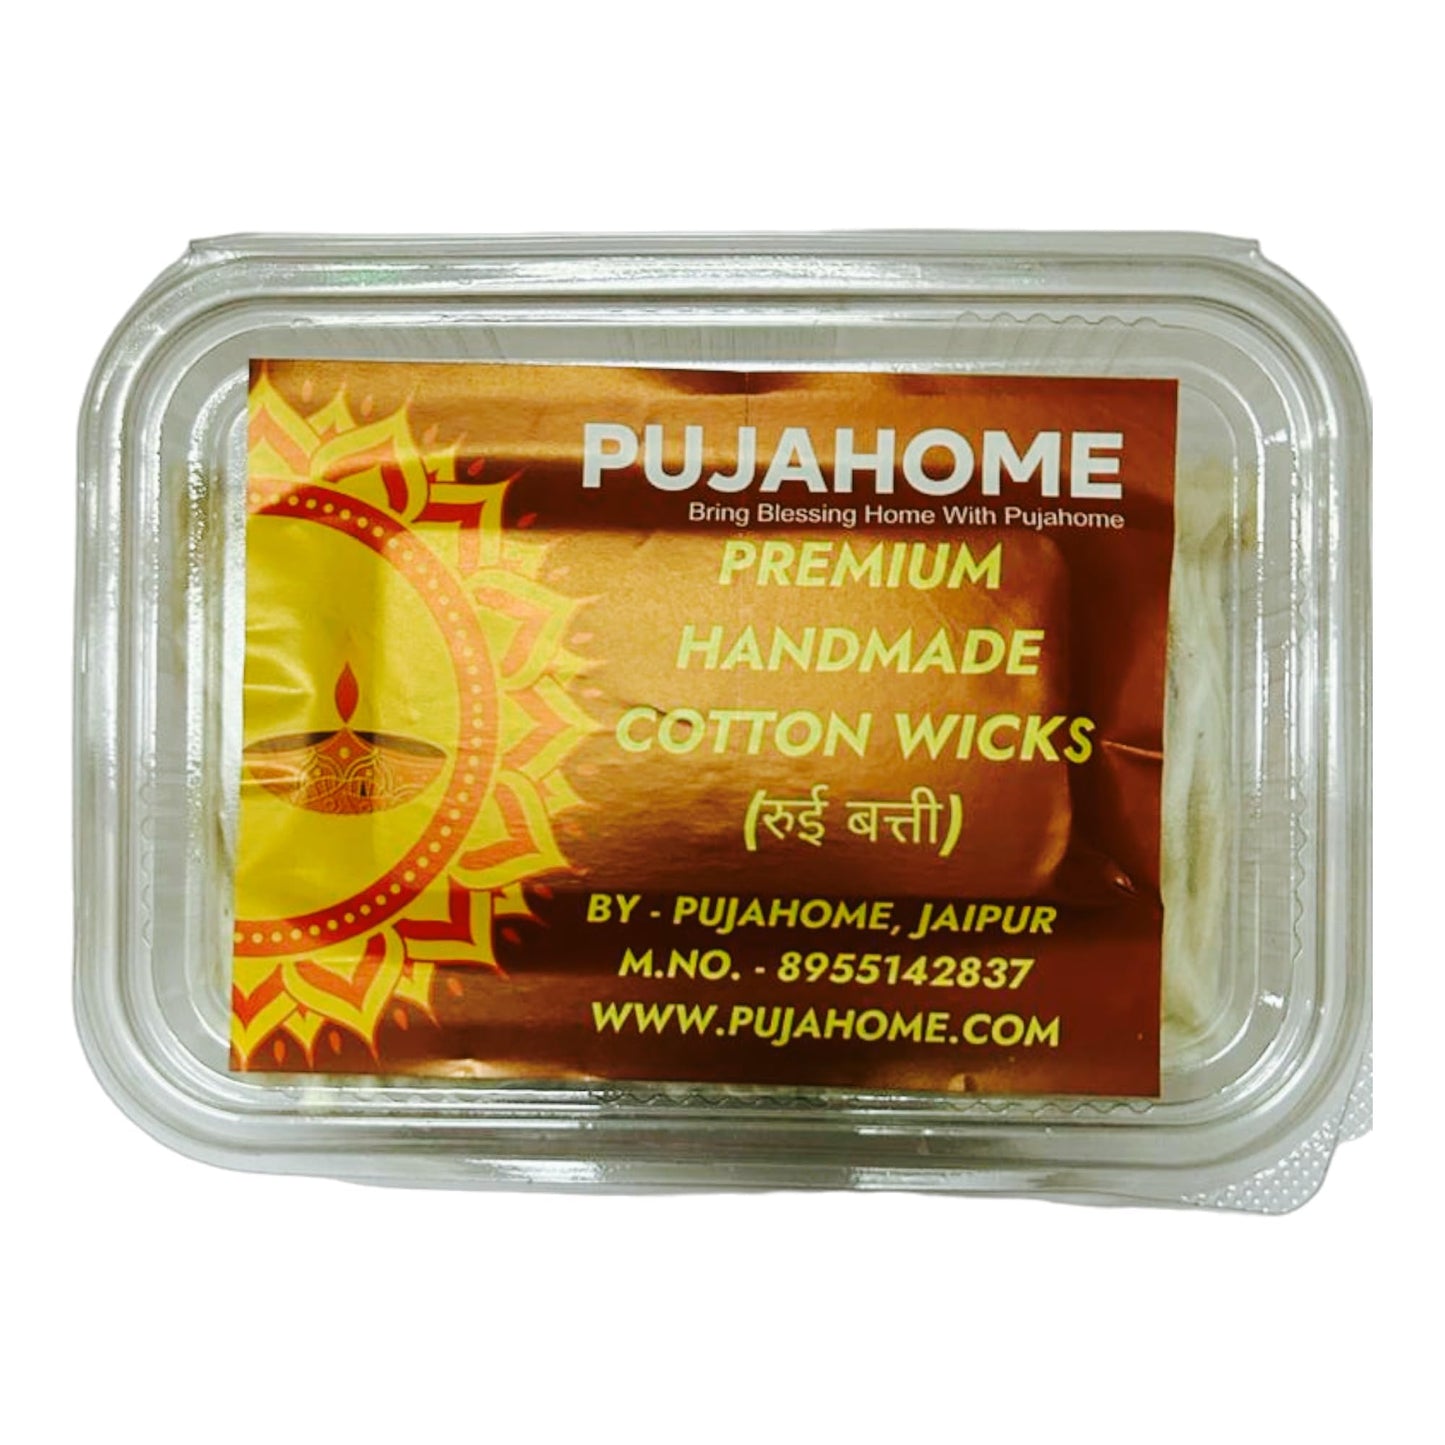 Pujahome Handmade Comber Long Cotton Wicks, Lambi Cotton Batti Box for Diwali Puja, Pack of 1000 Wicks